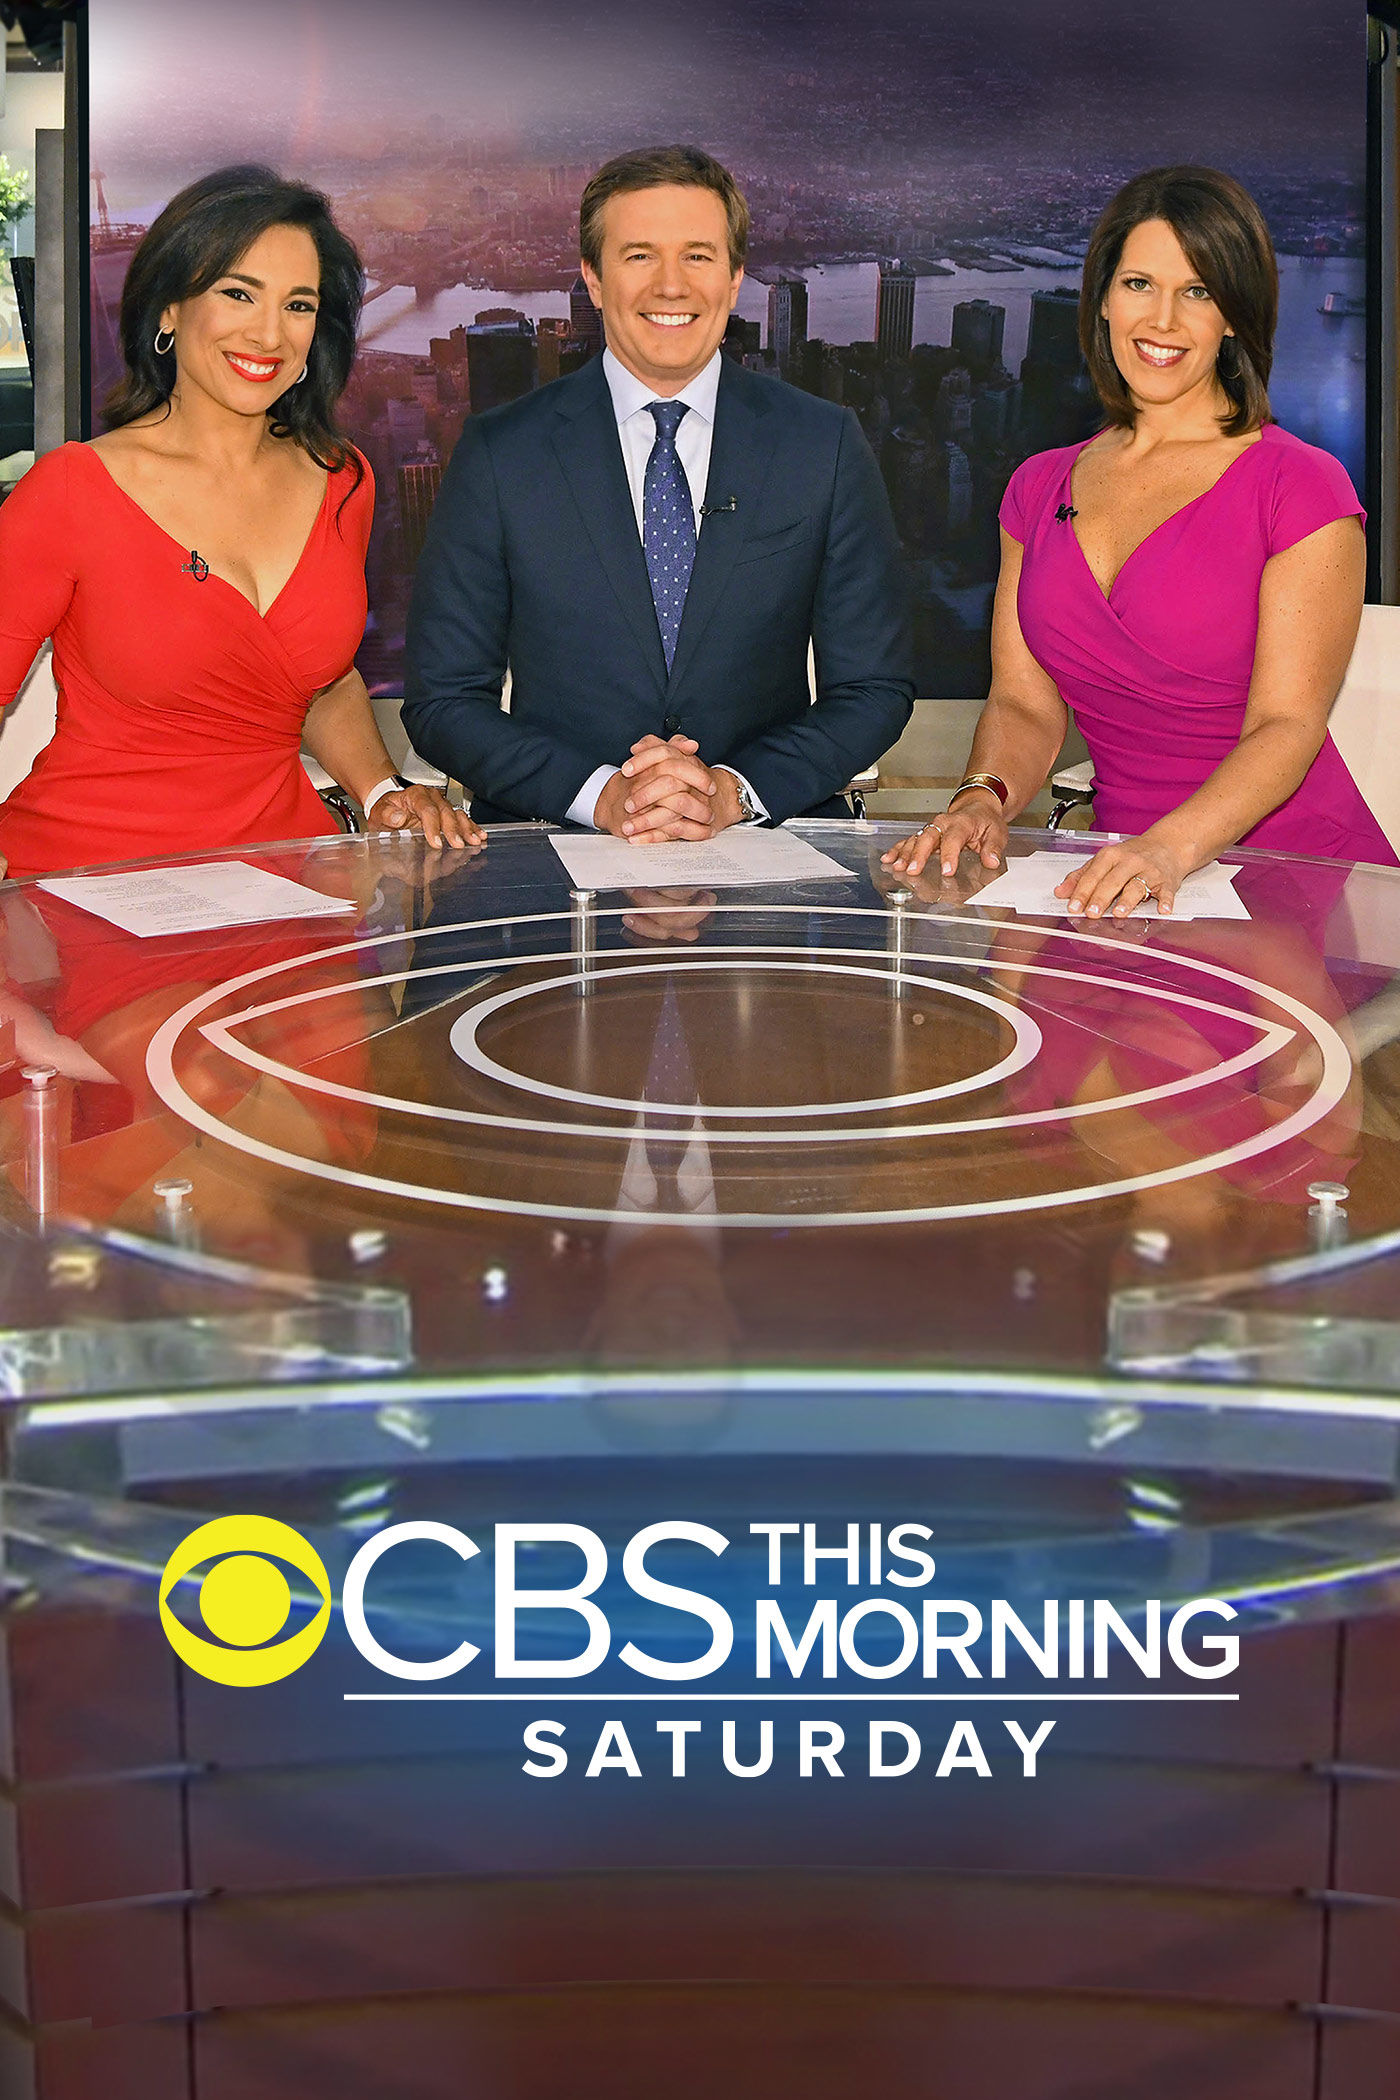 Cbs This Morning Saturday Cast CBS This Morning Saturday morning